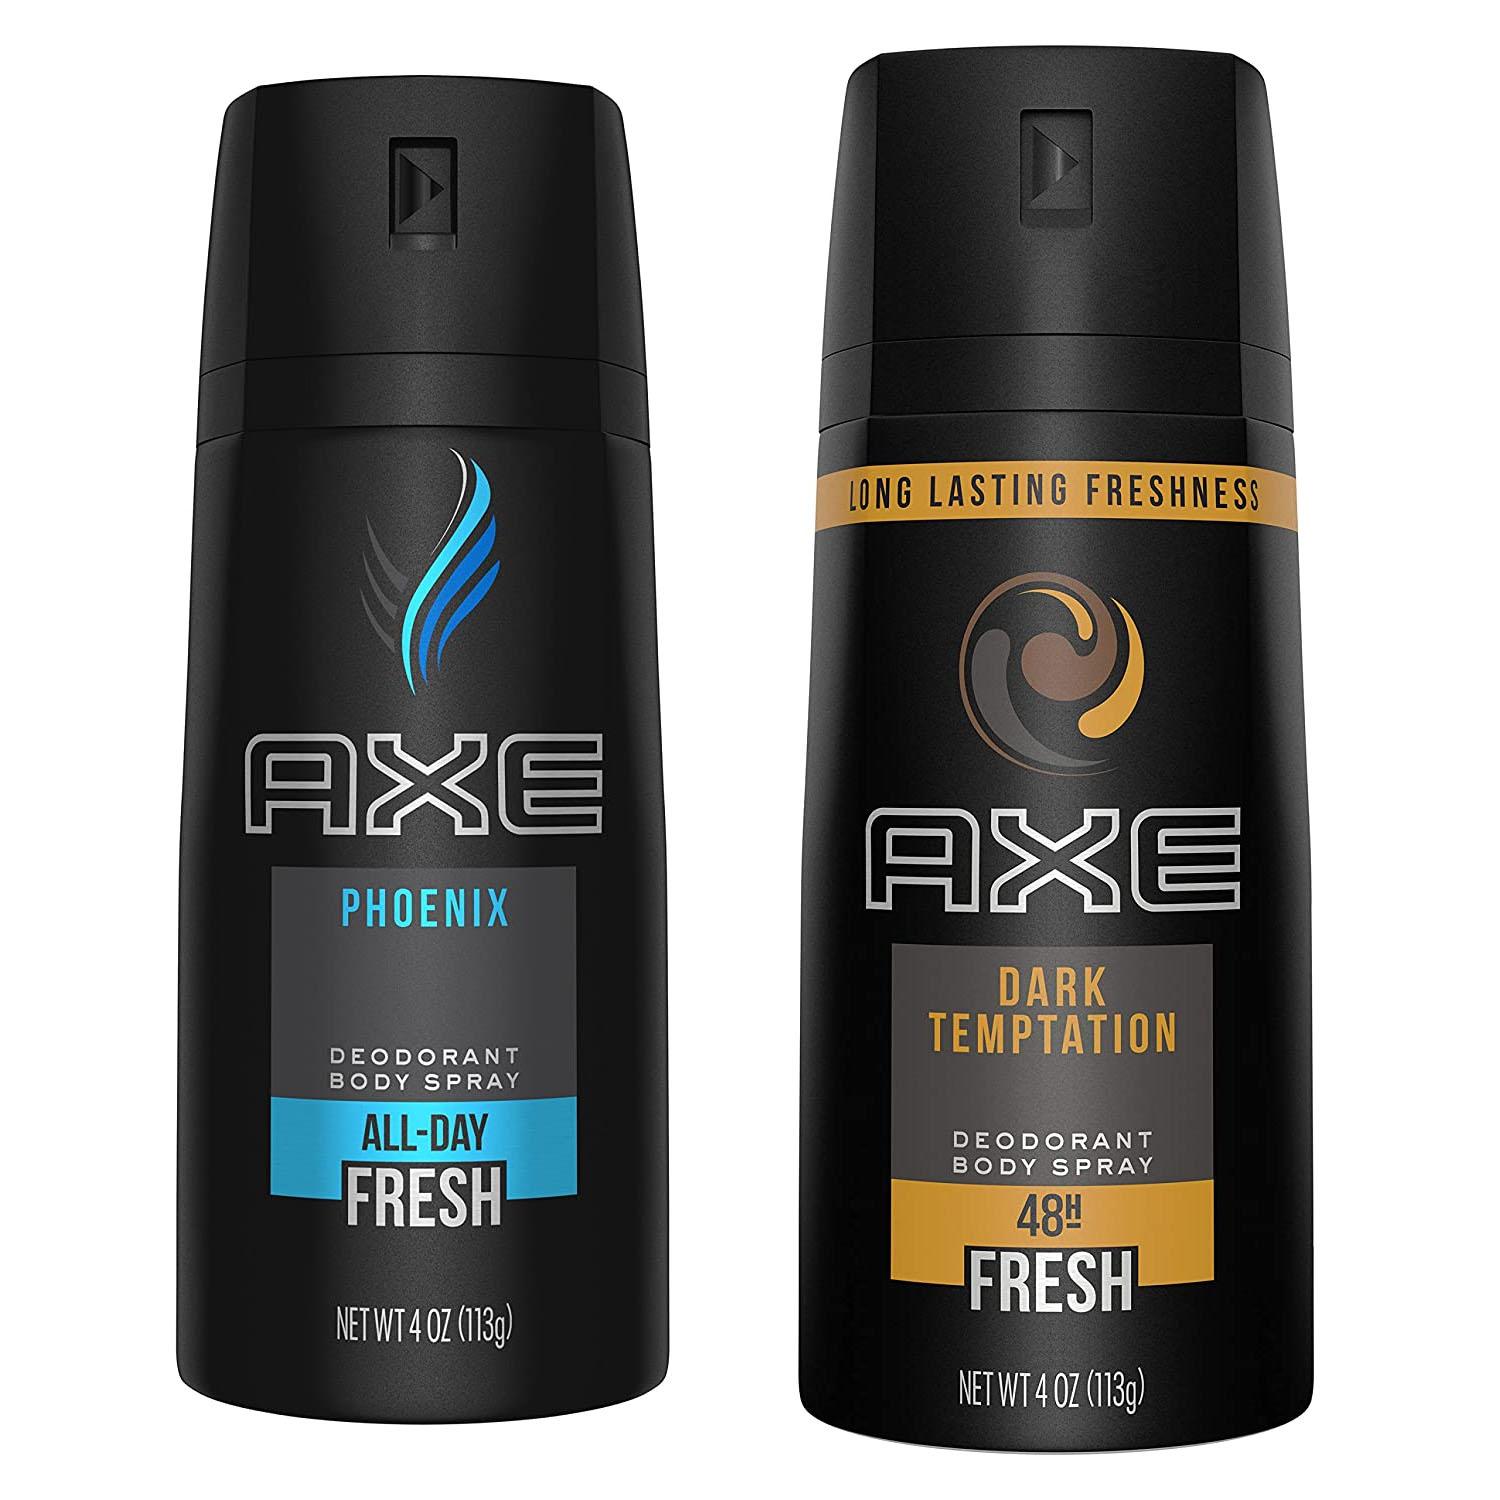 2 Axe Mens Body Spray or Deodorants for $4.50